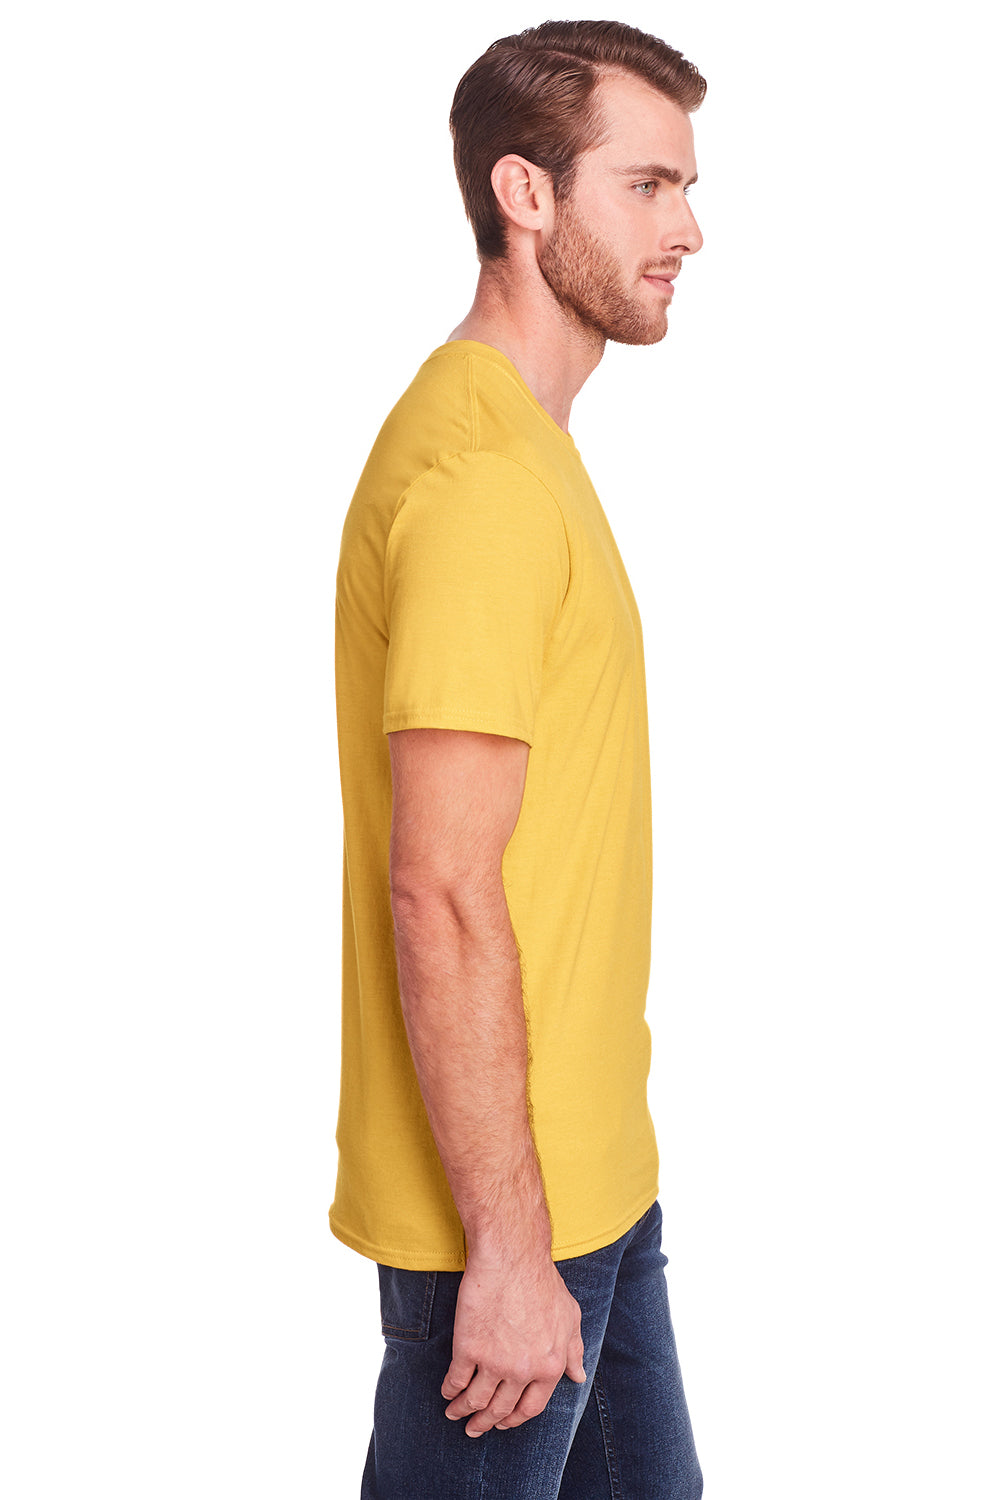 Fruit Of The Loom IC47MR Mens Iconic Short Sleeve Crewneck T-Shirt Heather Mustard Yellow Side